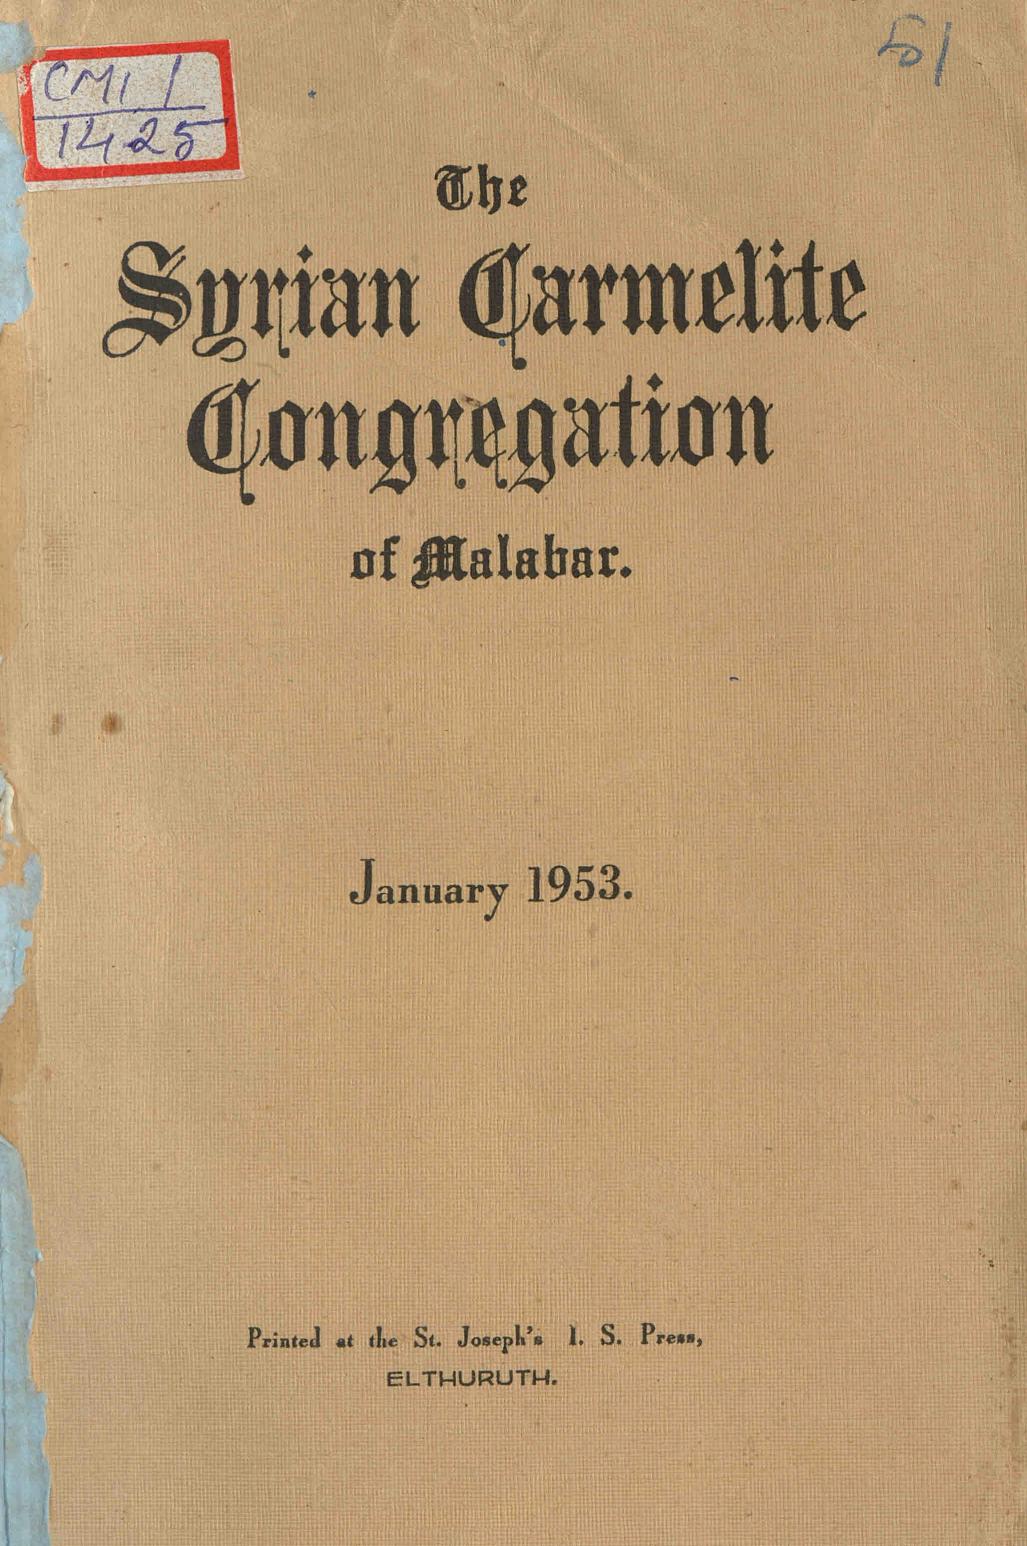 1953 - The Syrian Carmalite Congregation of Malabar